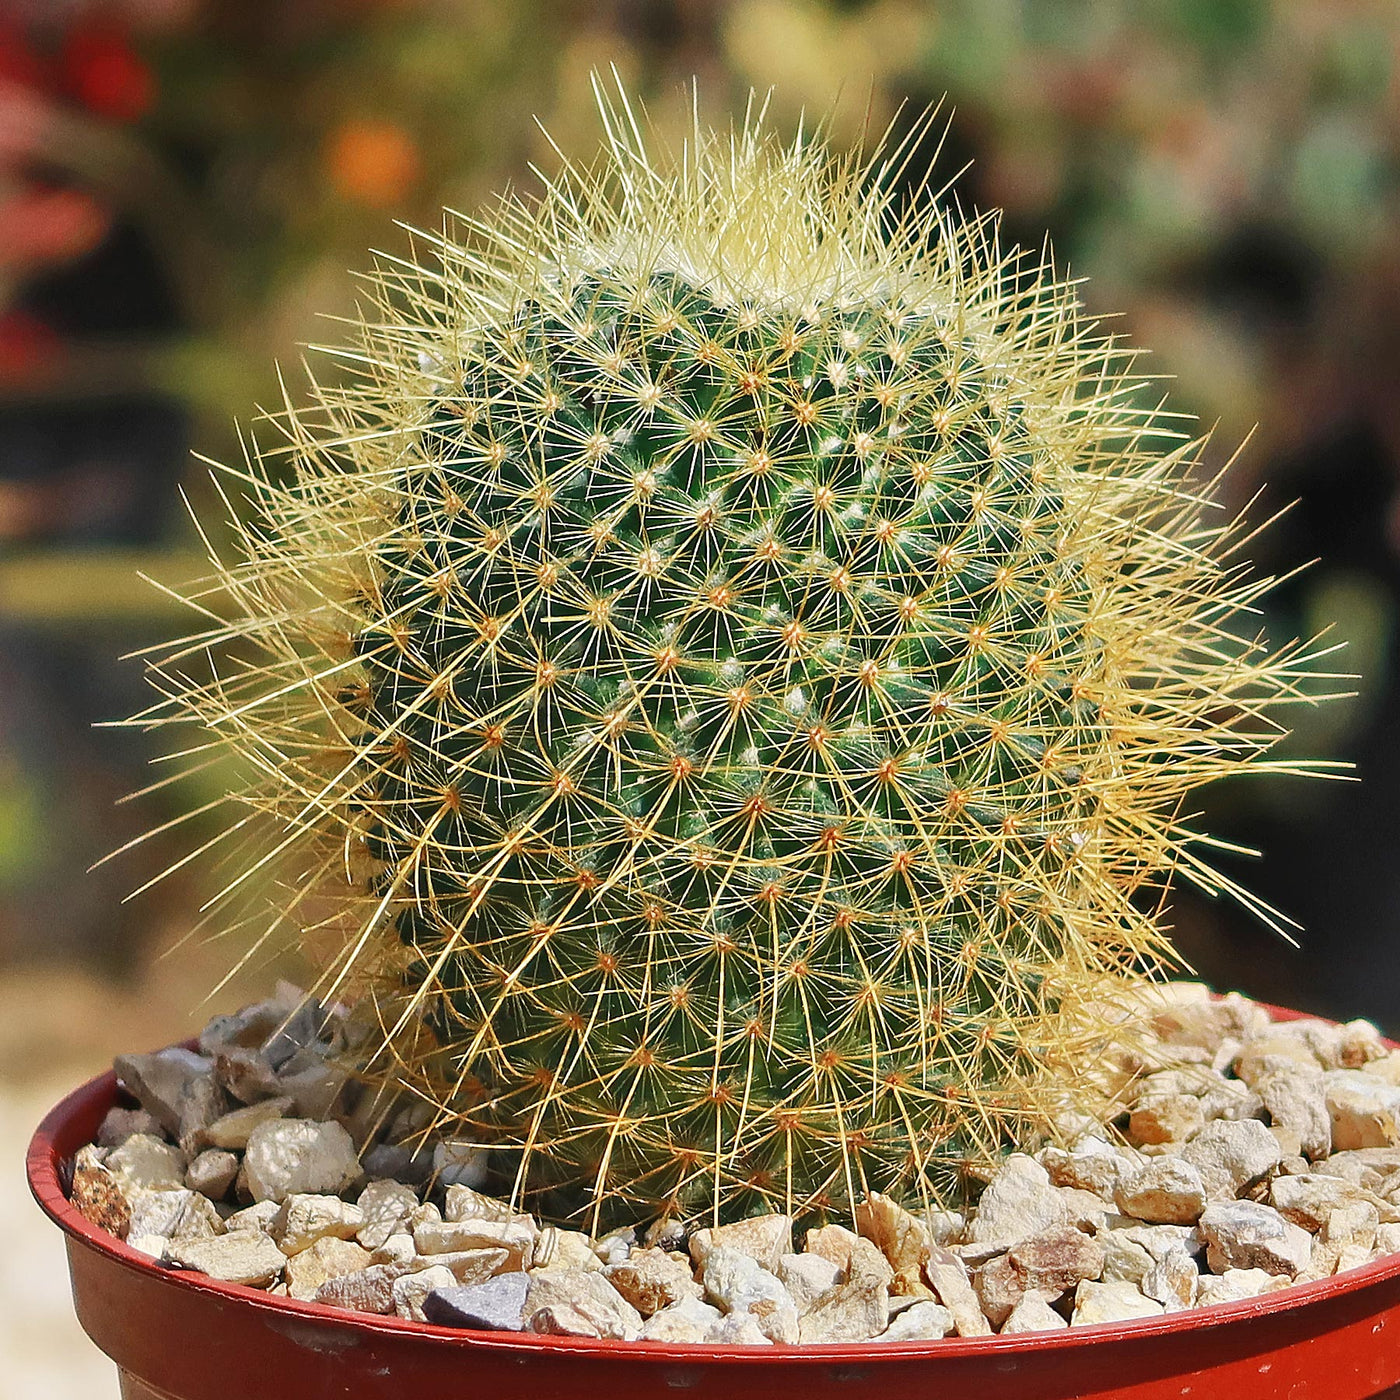 Lemon Ball Cactus - Mammillaria pringlei